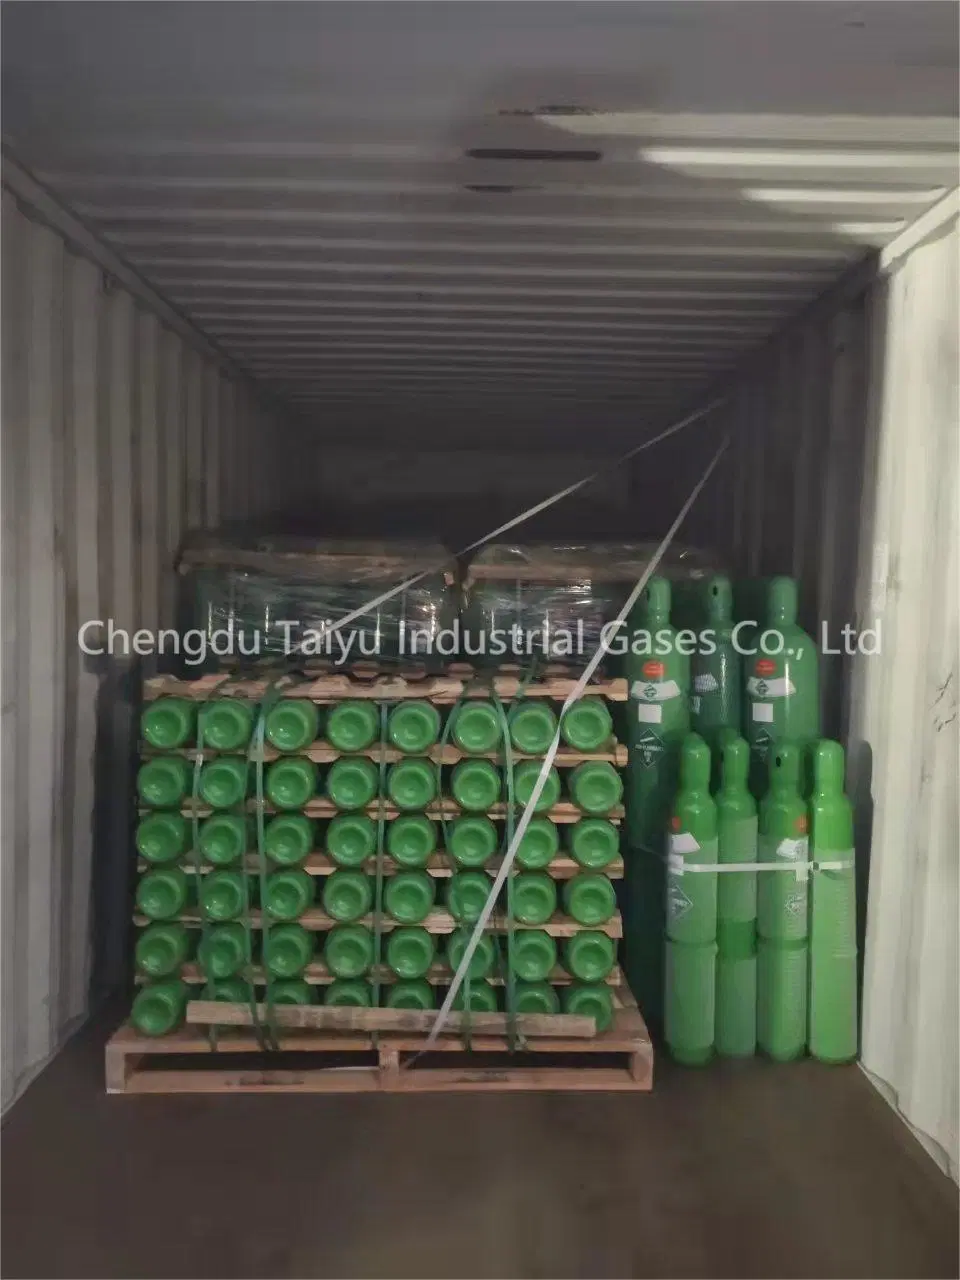 Factory Supplied China Good Quality Sf6 Gas / So2 Sulfur Dioxide / CH4 Methane / H2s Gas / HCl Gas / C2h4 Ethylene Gas / Co Gas / Nh3 Ammonia / C4h10 Butane Gas